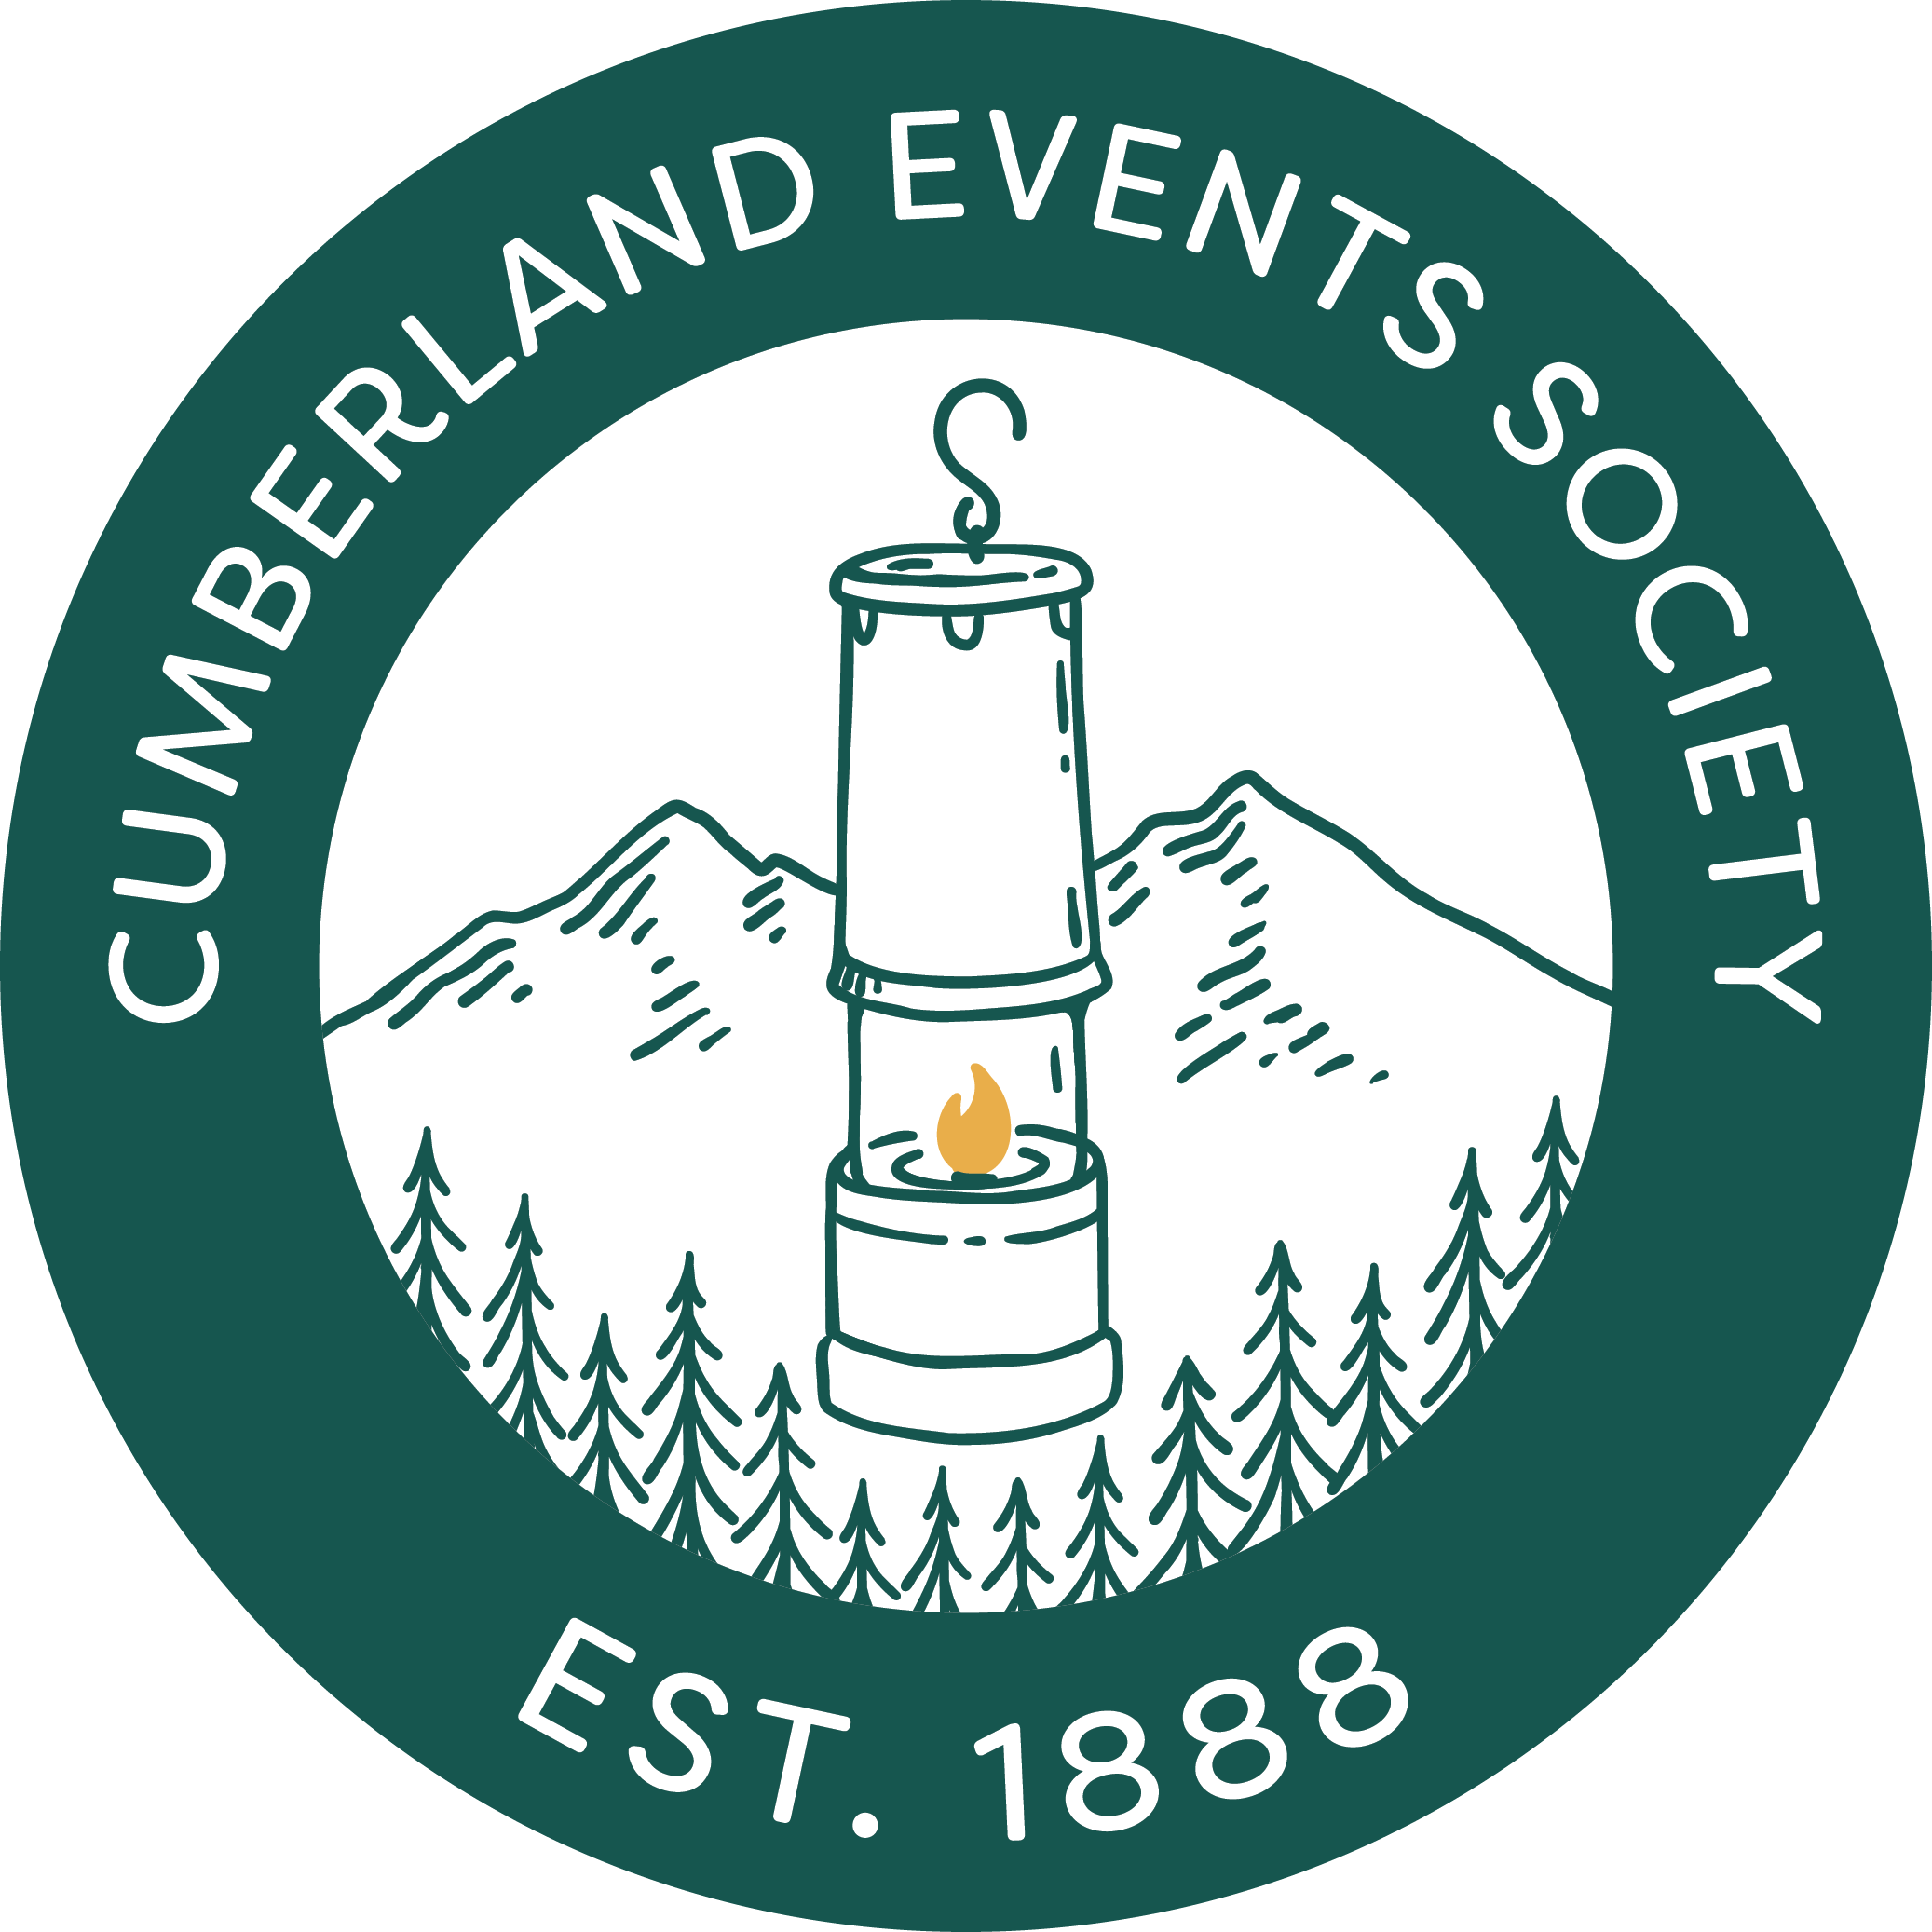 Cumberland Events Society